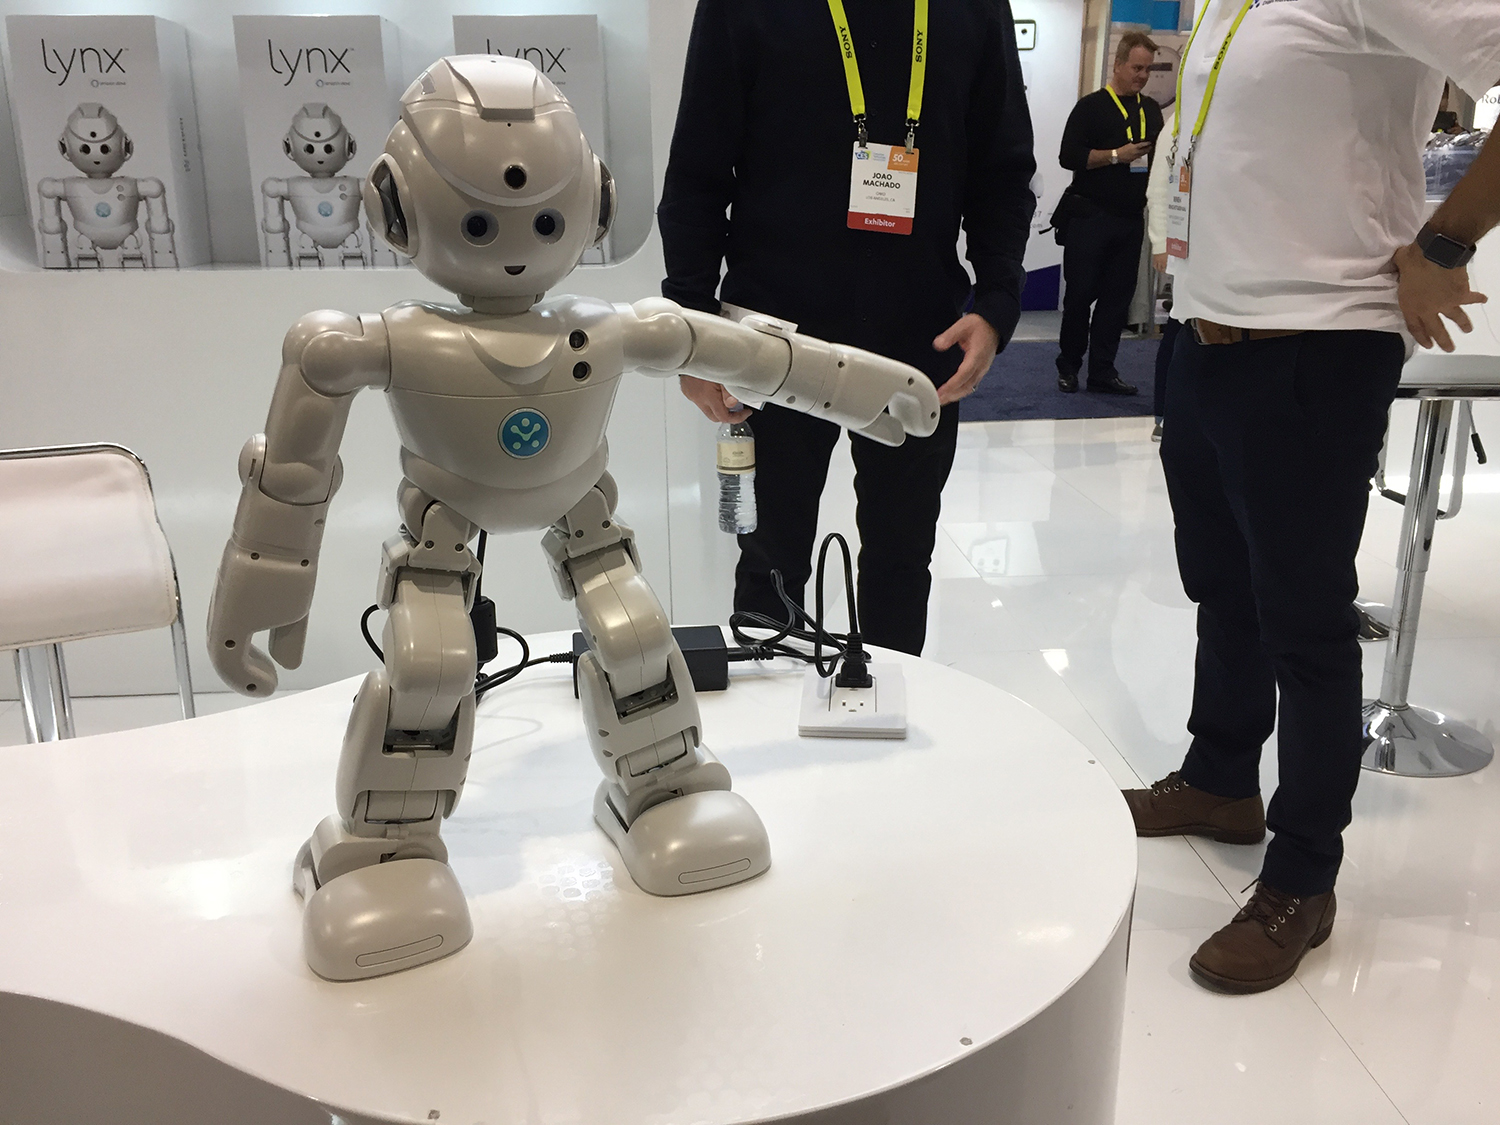 The Alexa-powered smart bot, Lynx.